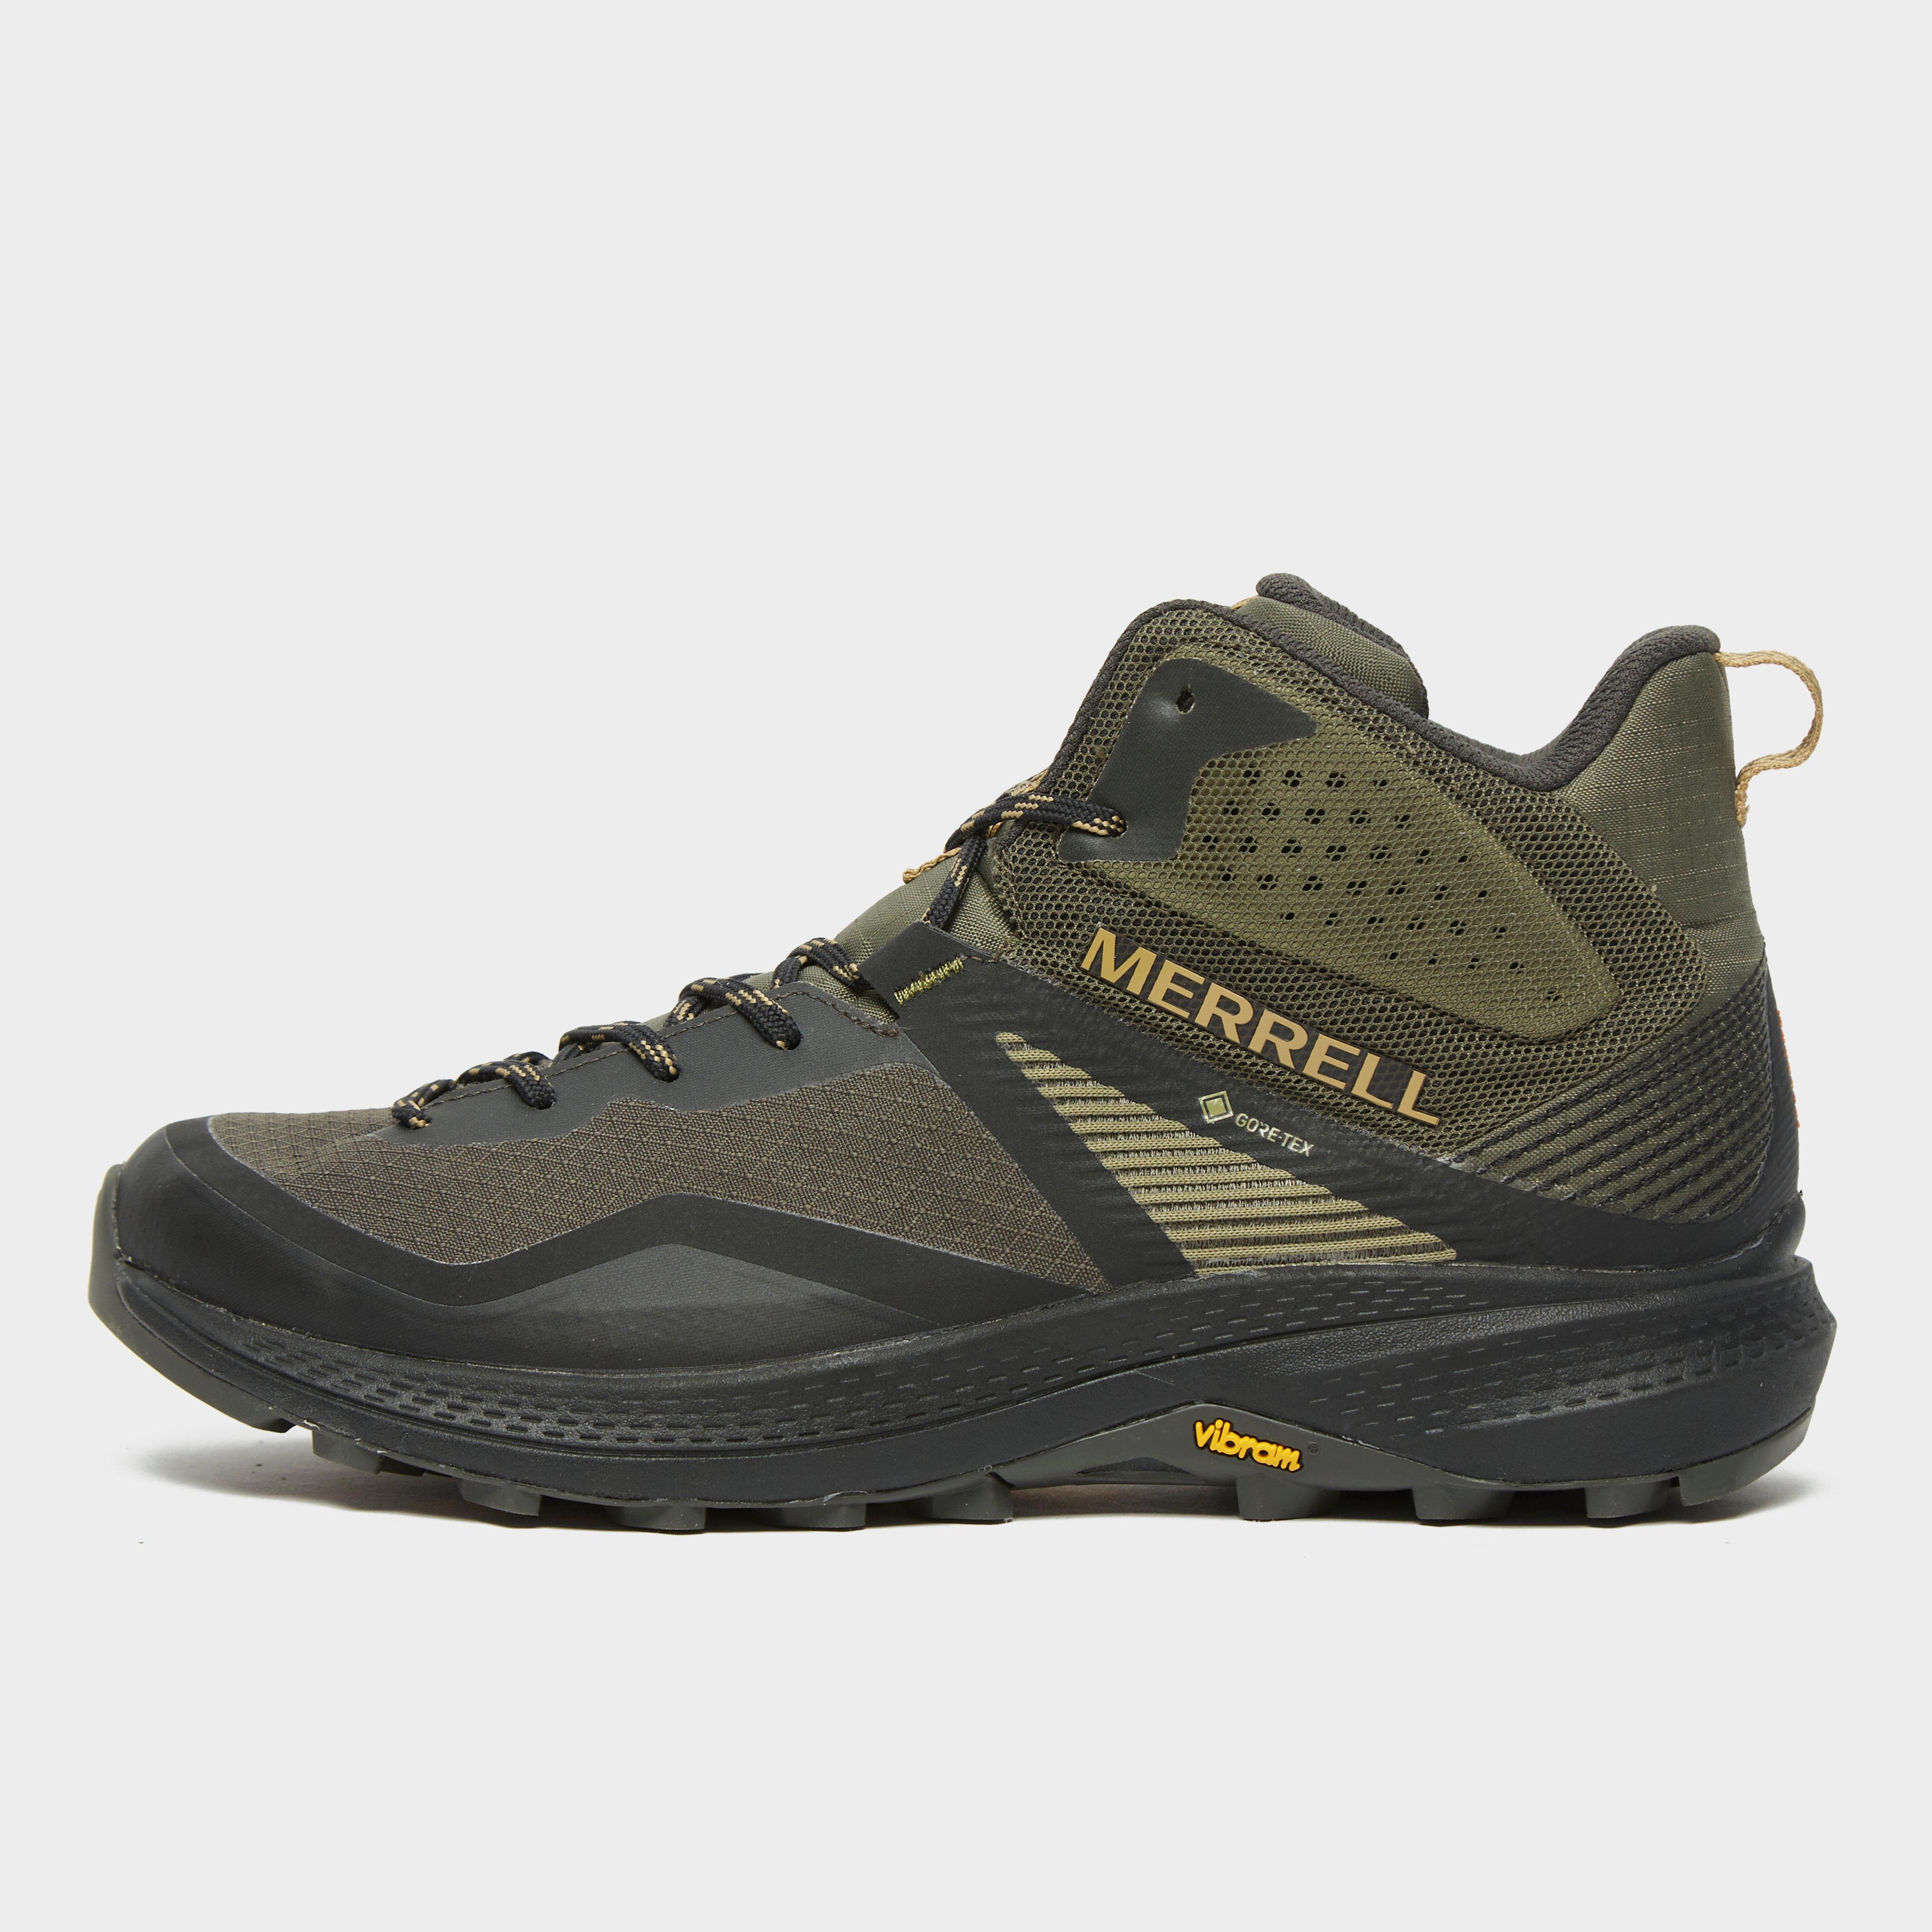 Merrell Mens Mqm 3 Gore-tex Mid Walking Boots - Khaki/khaki  Khaki/khaki